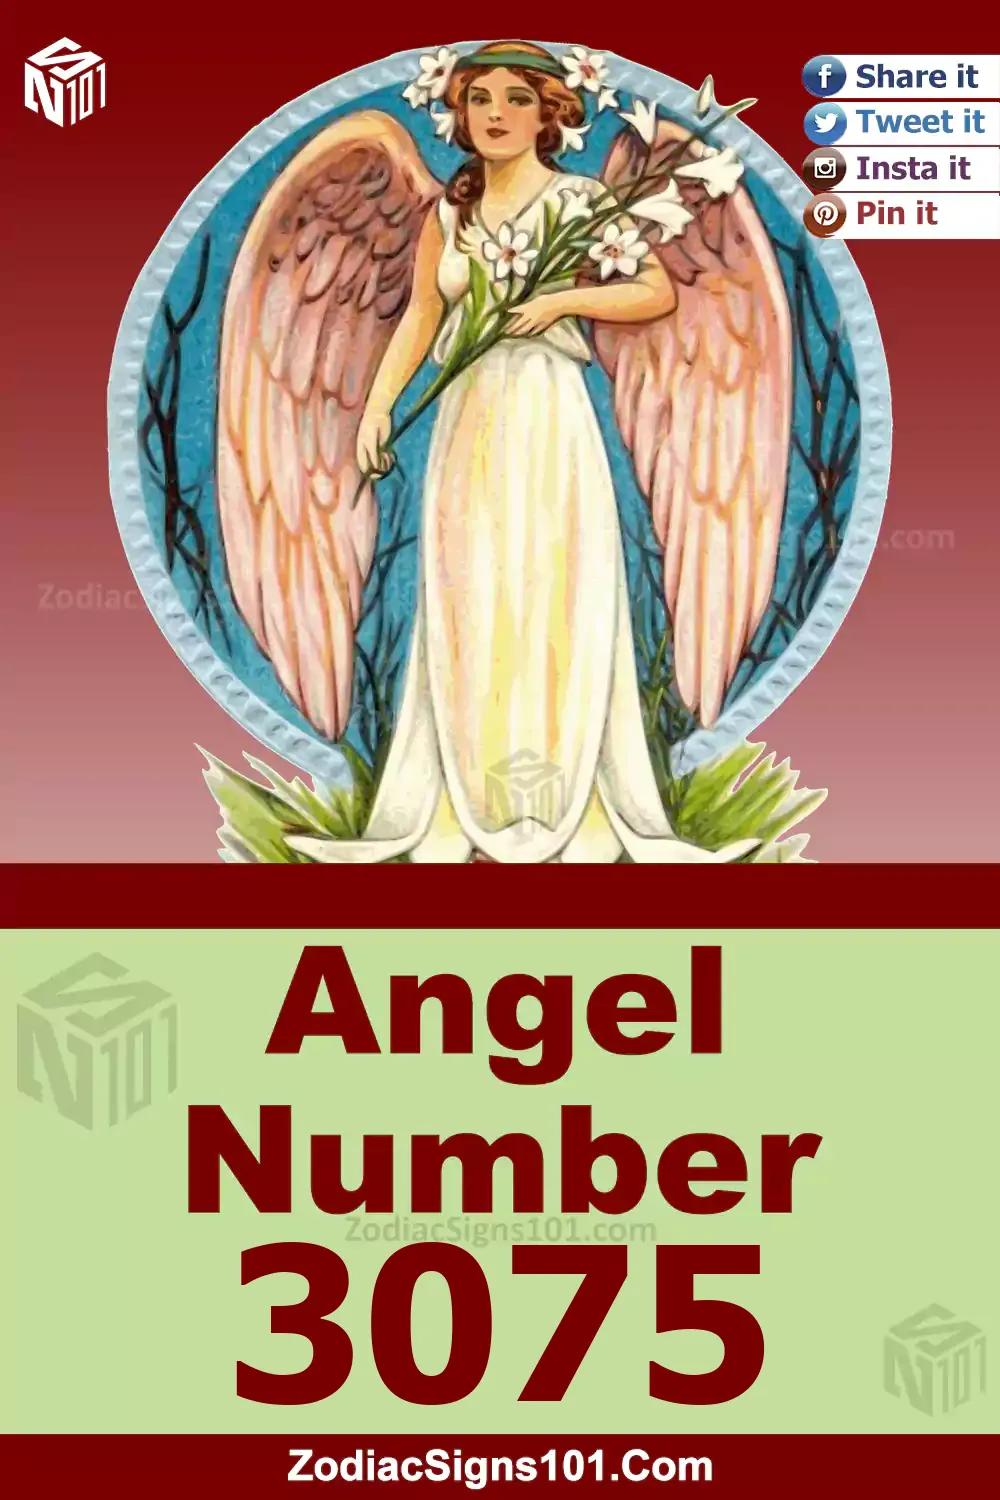 3075-Angel-Number-Meaning.jpg